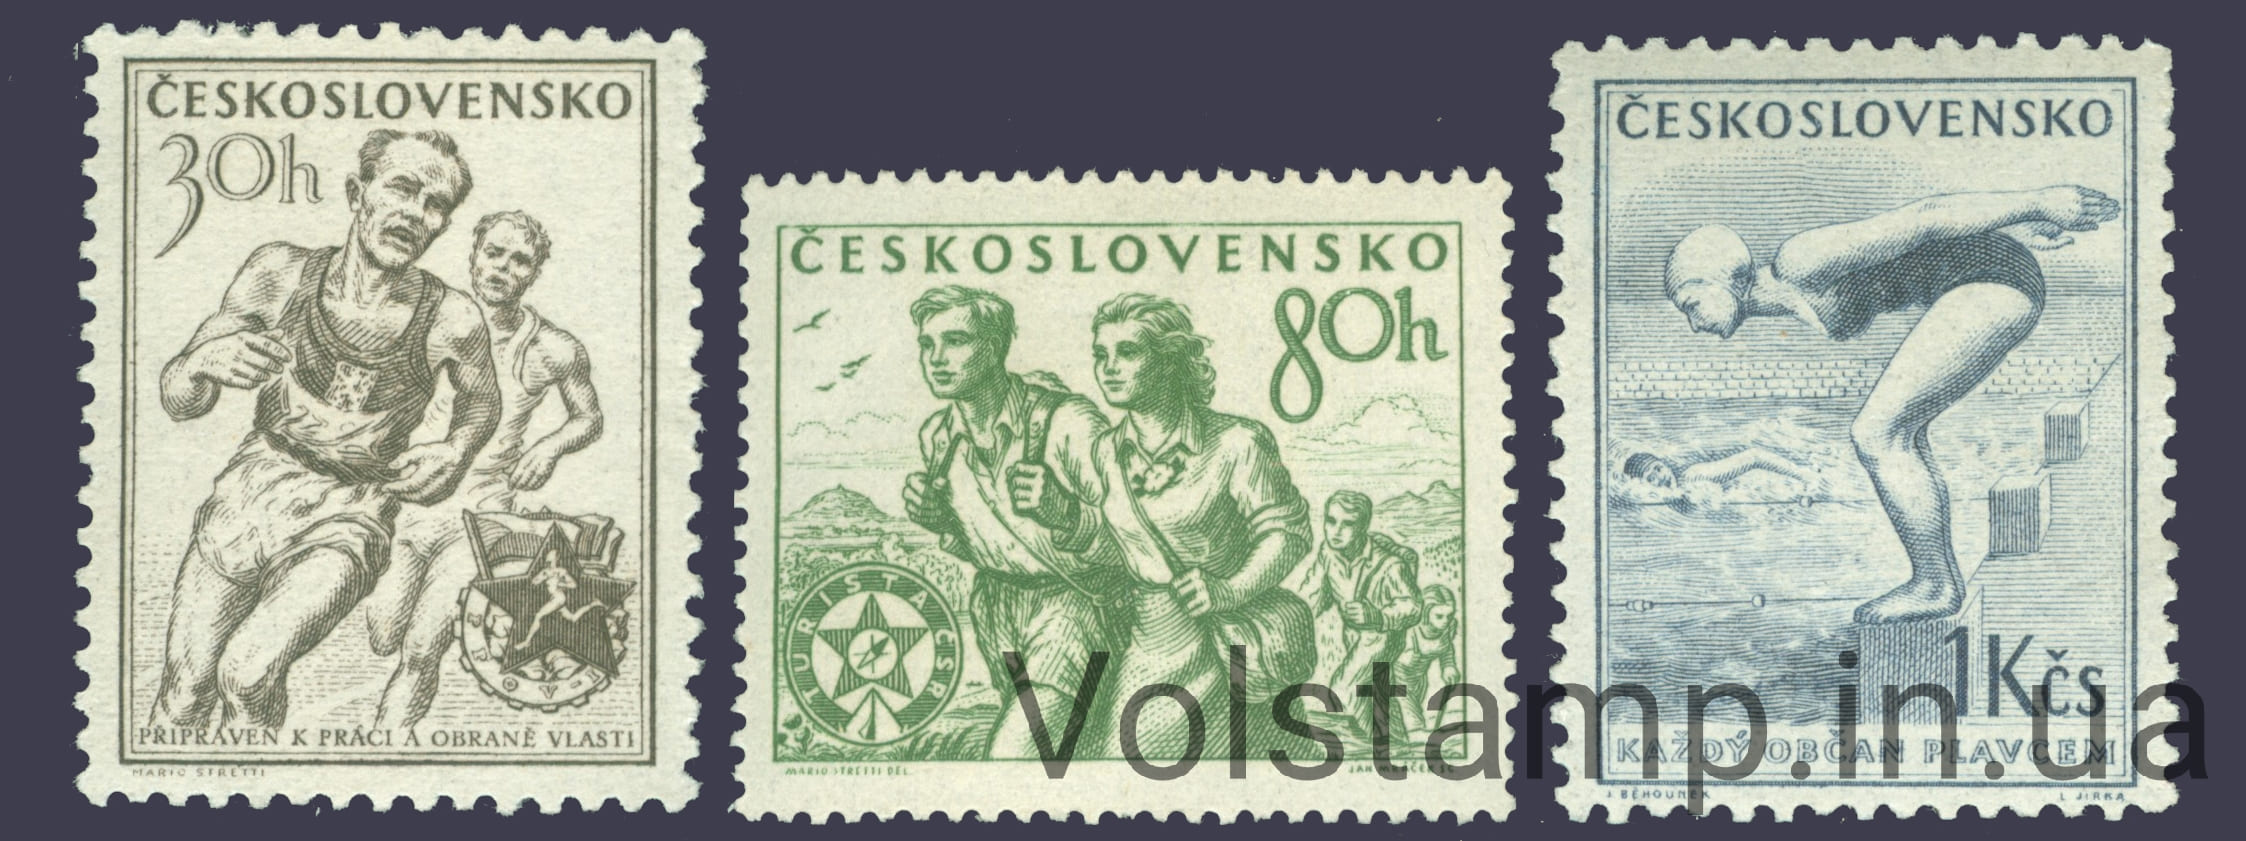 1954 Чехословакия Серия марок (Спорт, бег плаванье) MNH №856-858